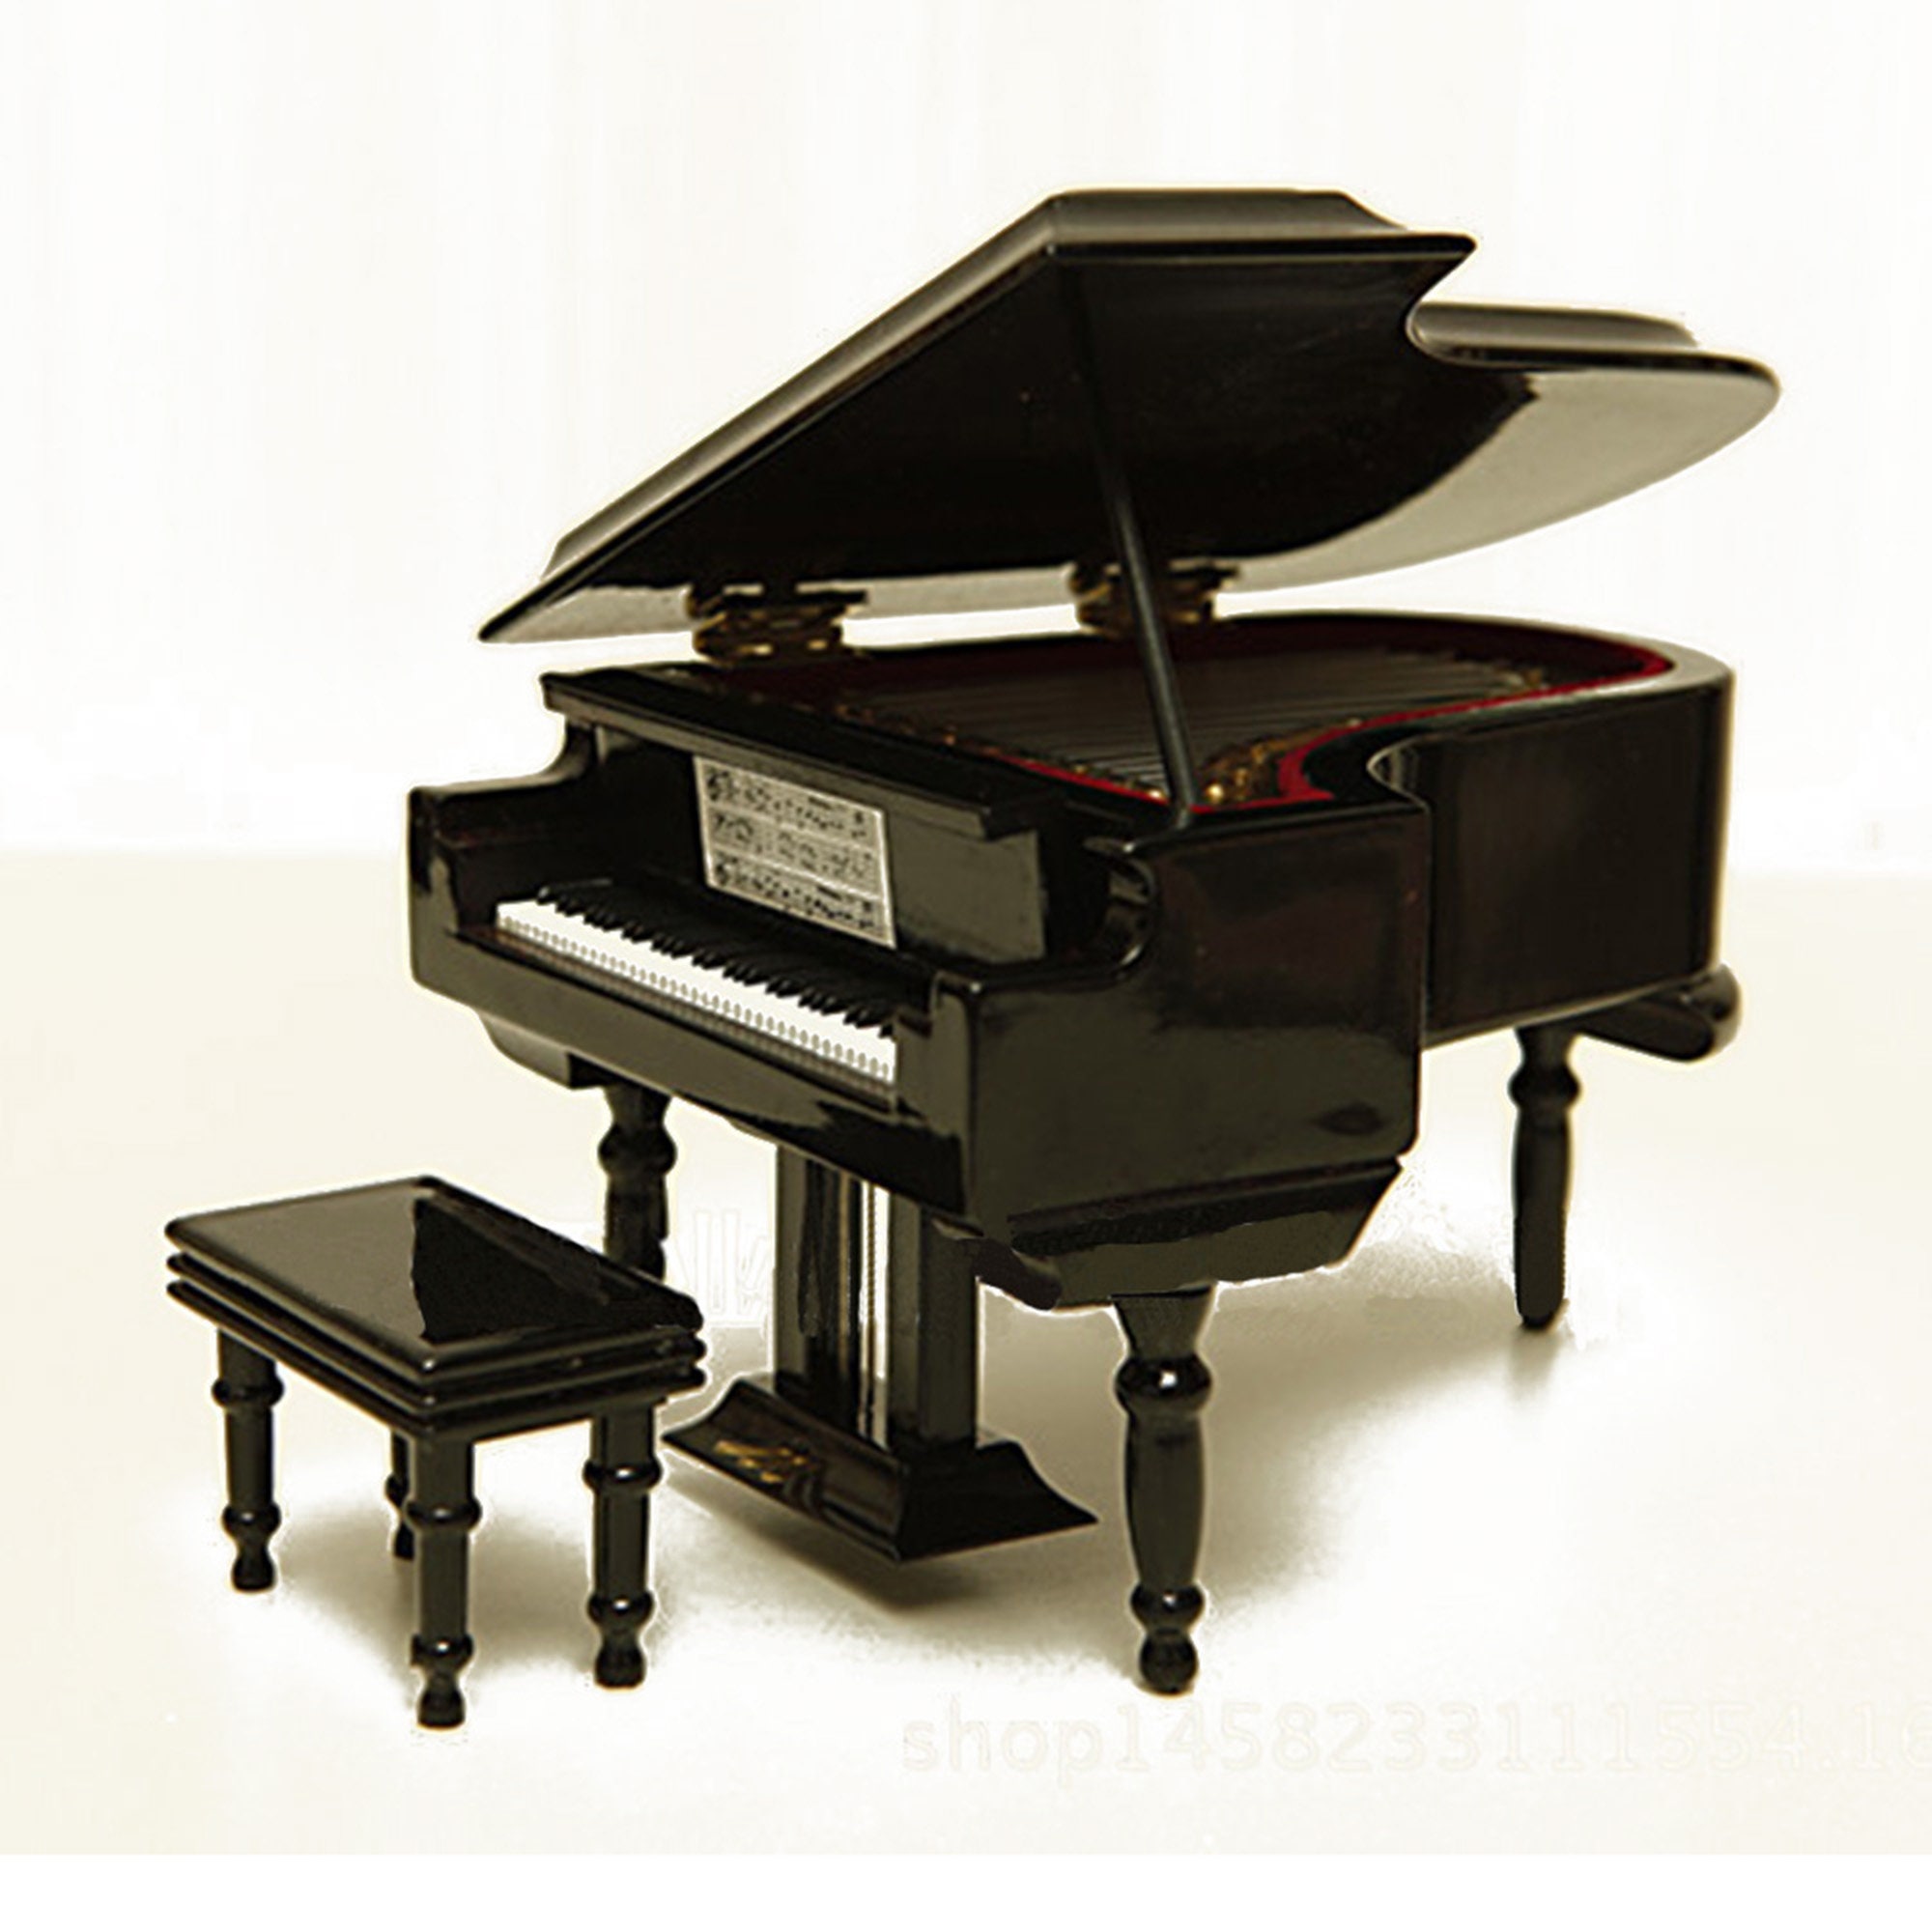 2 Pcs 88 Touches Amovible Piano Key Étiquettes Piano Keyboard Stickers Piano  Notes Marker Pour les débutants S